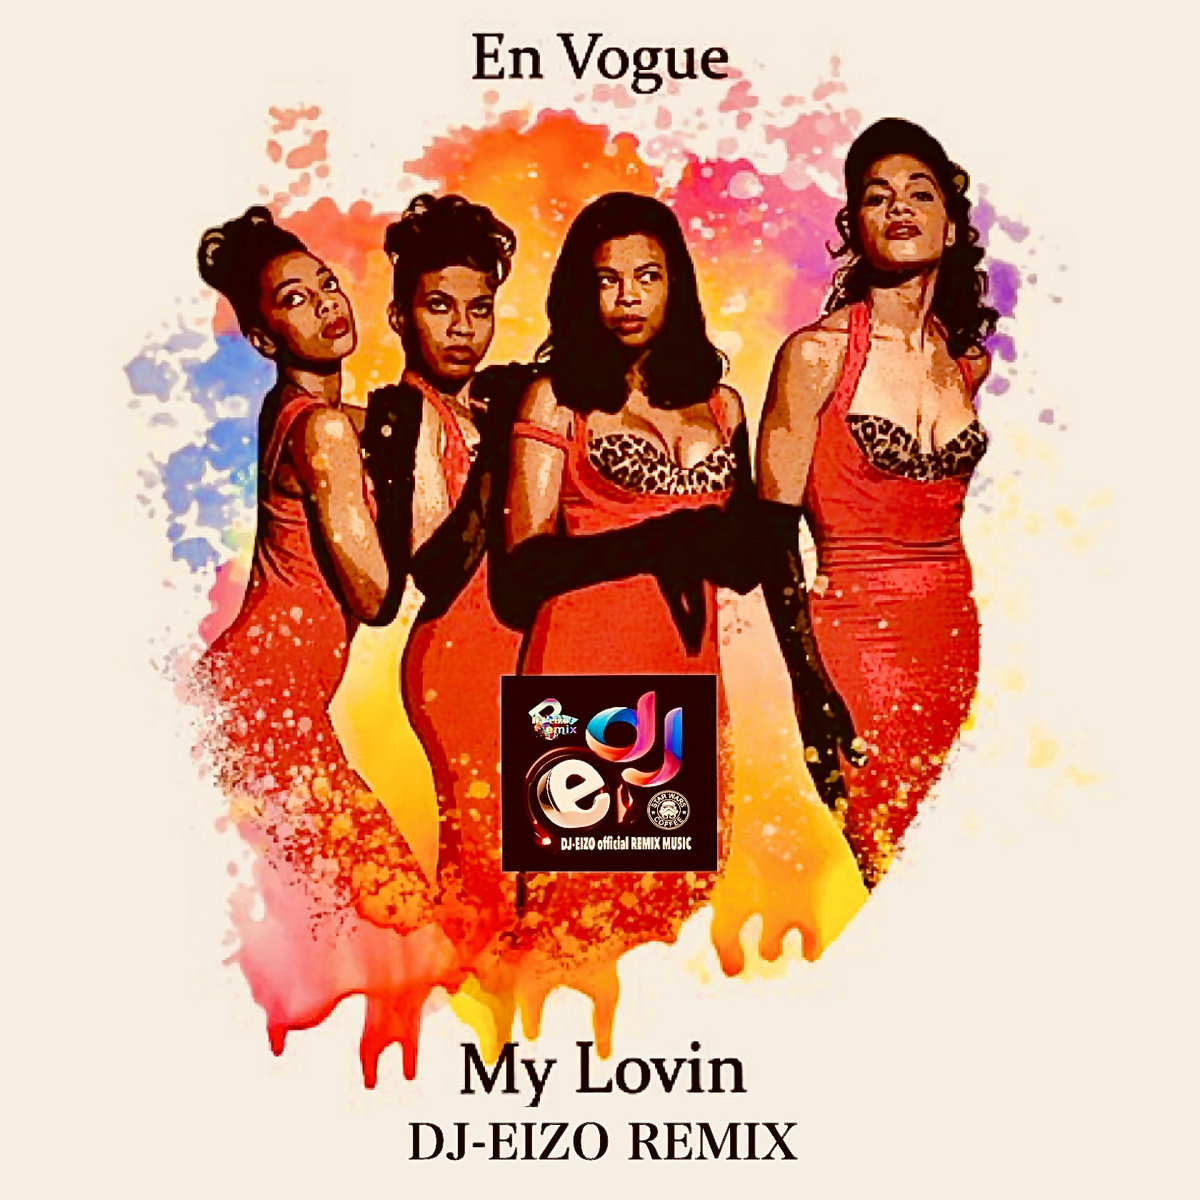 En Vogue - My Lovin'(You're Never Gonna Get It) Dj-Eizo Club Remix ...